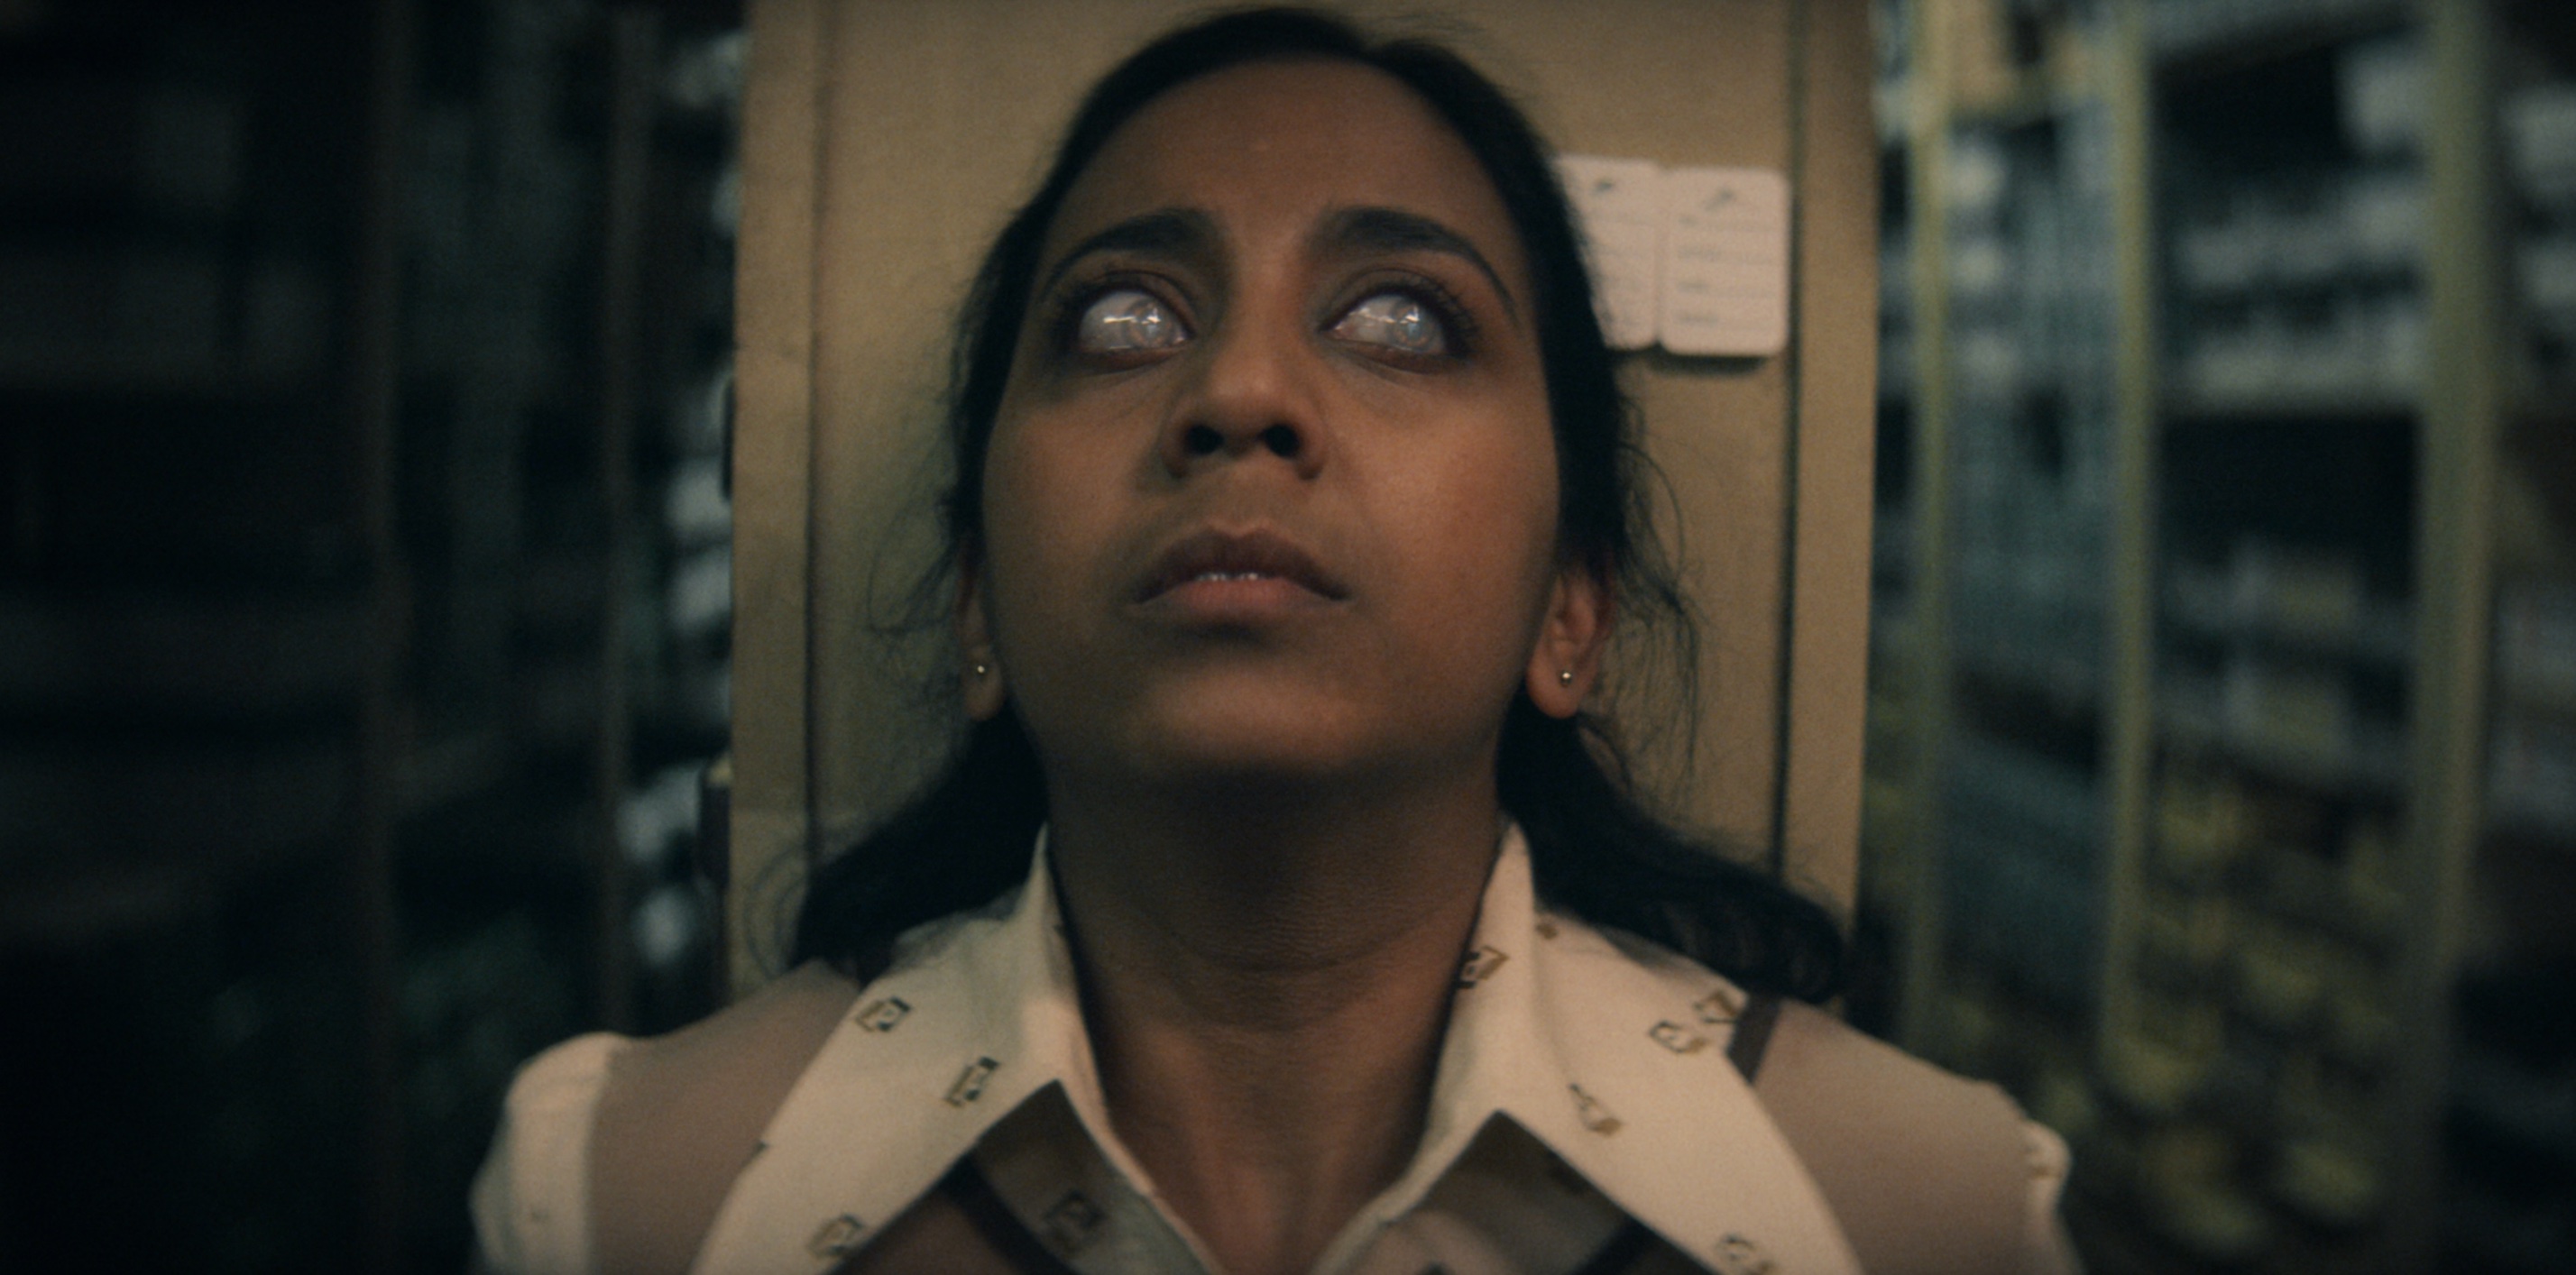 Black Mirror Cast on Netflix - Anjana Vasan as Nida Huq ("Demon 79")